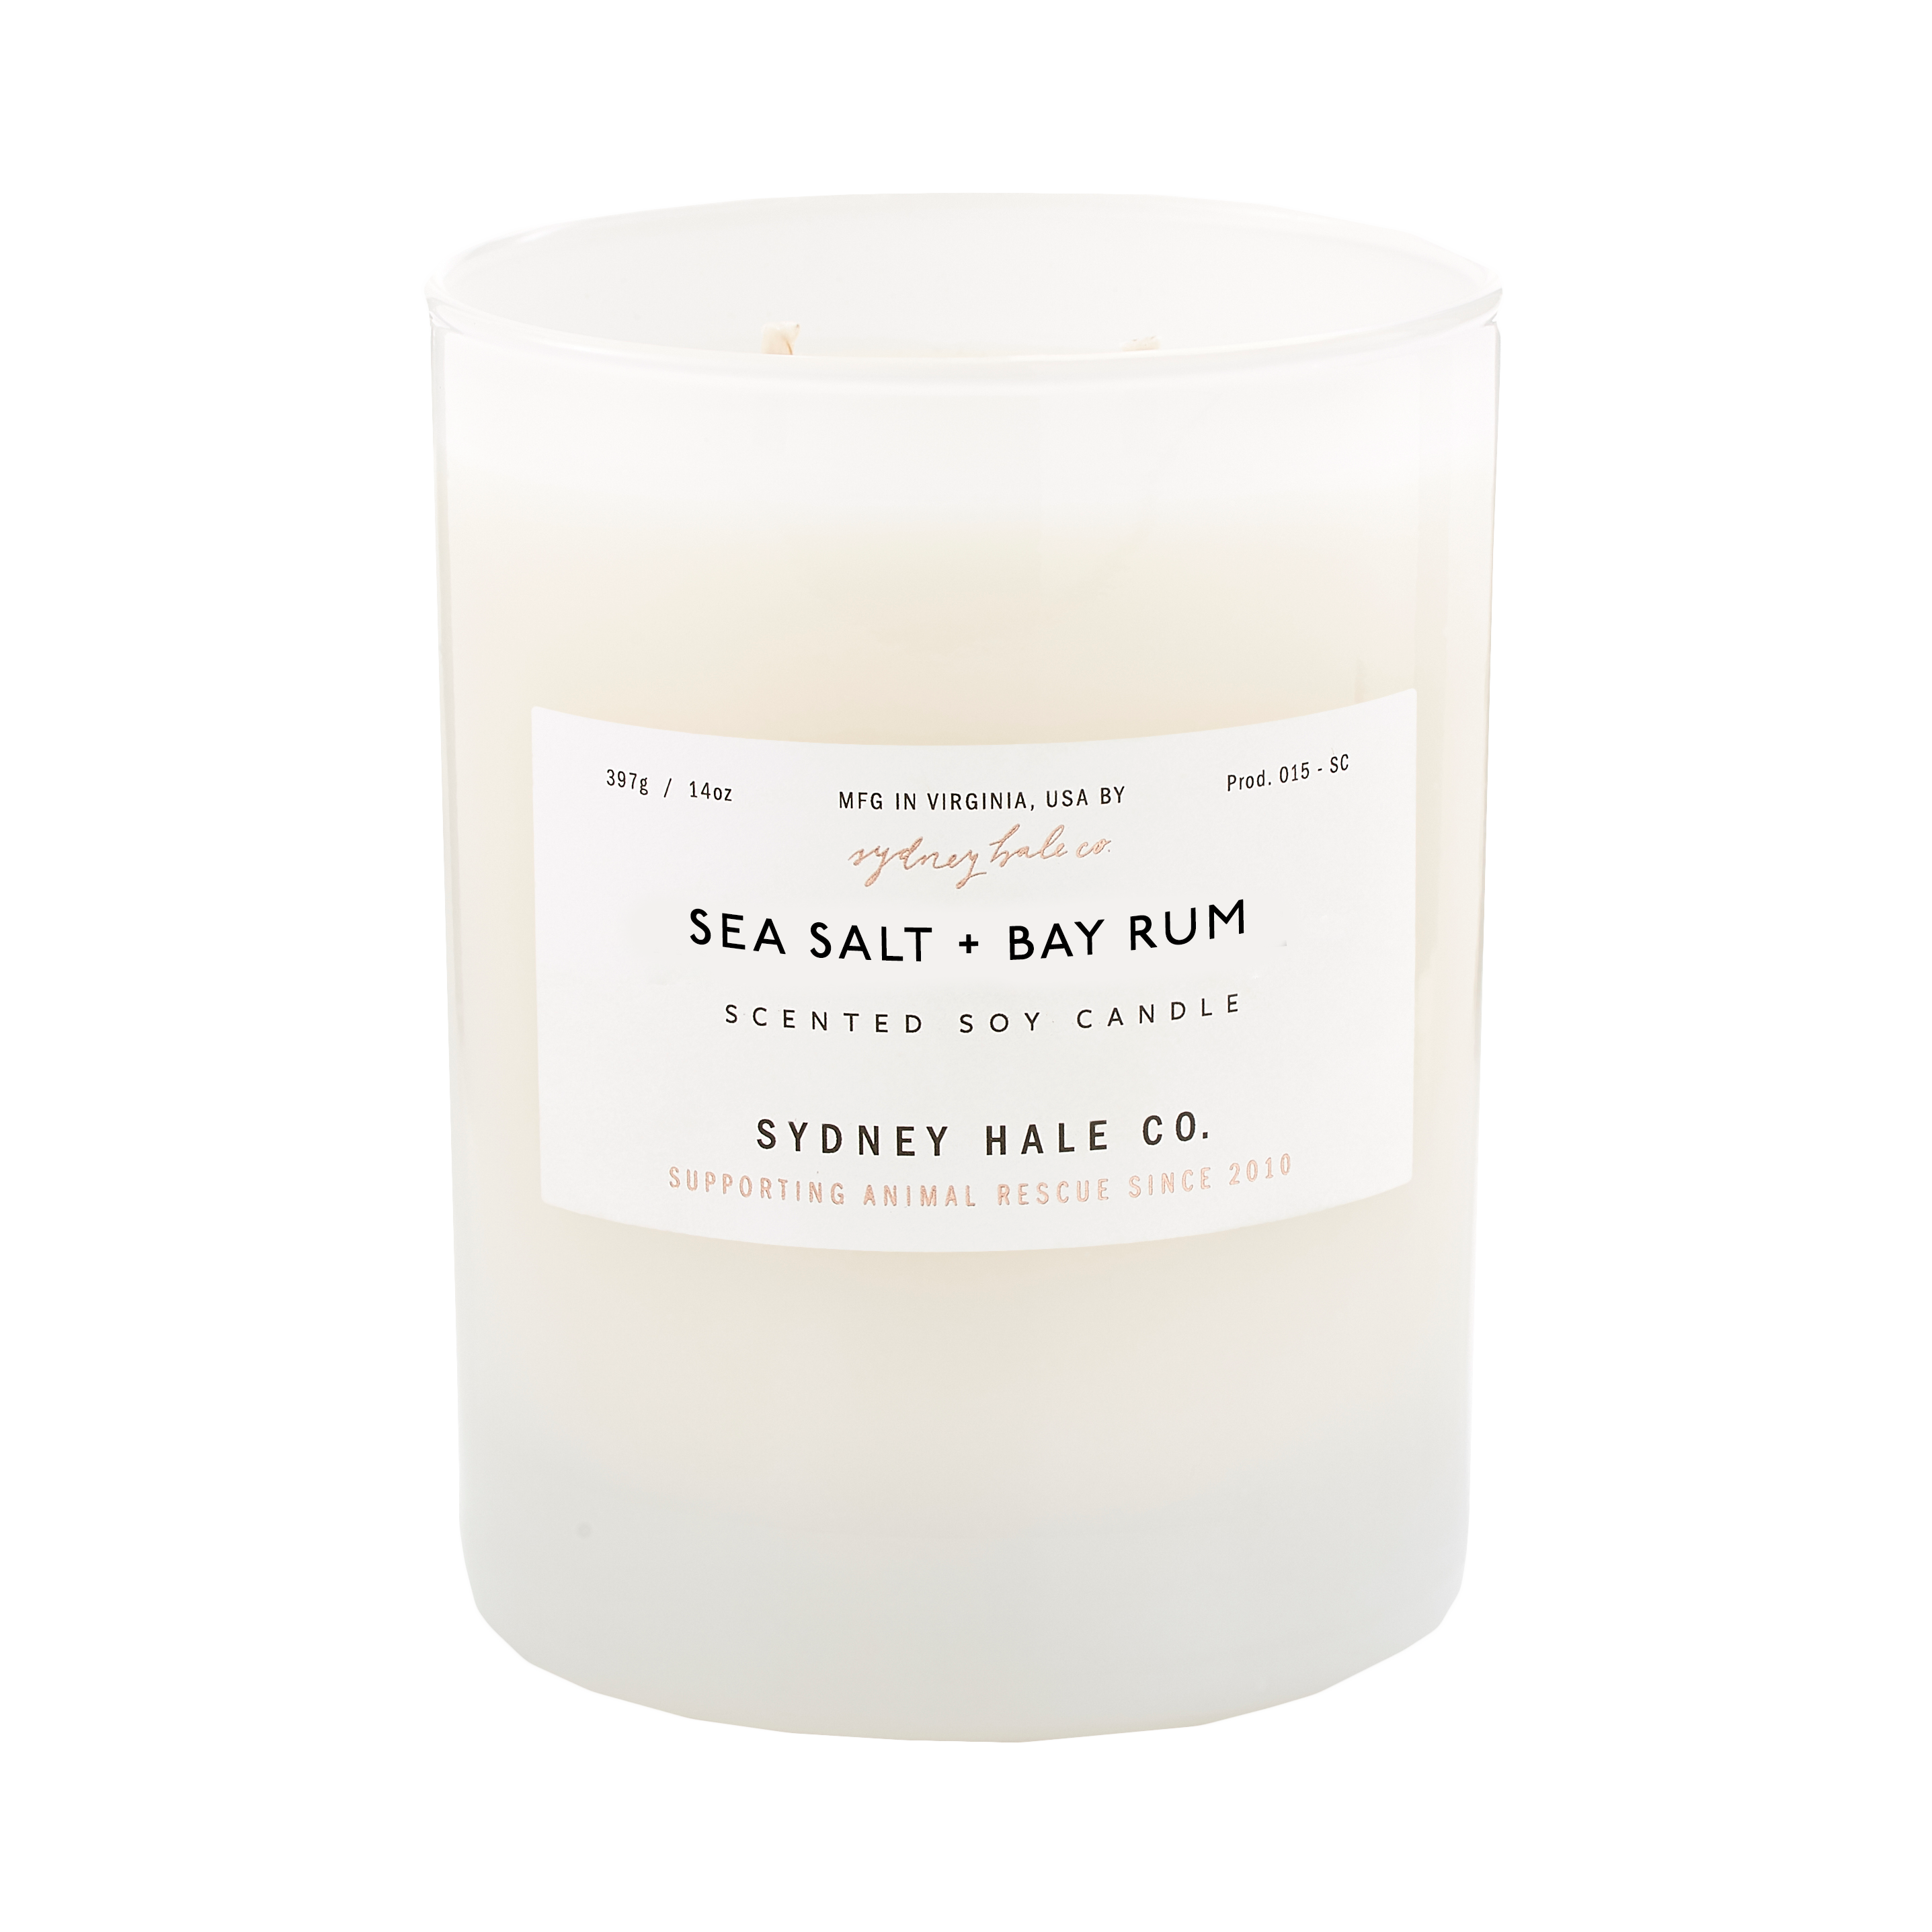 Sea Salt + Bay Rum